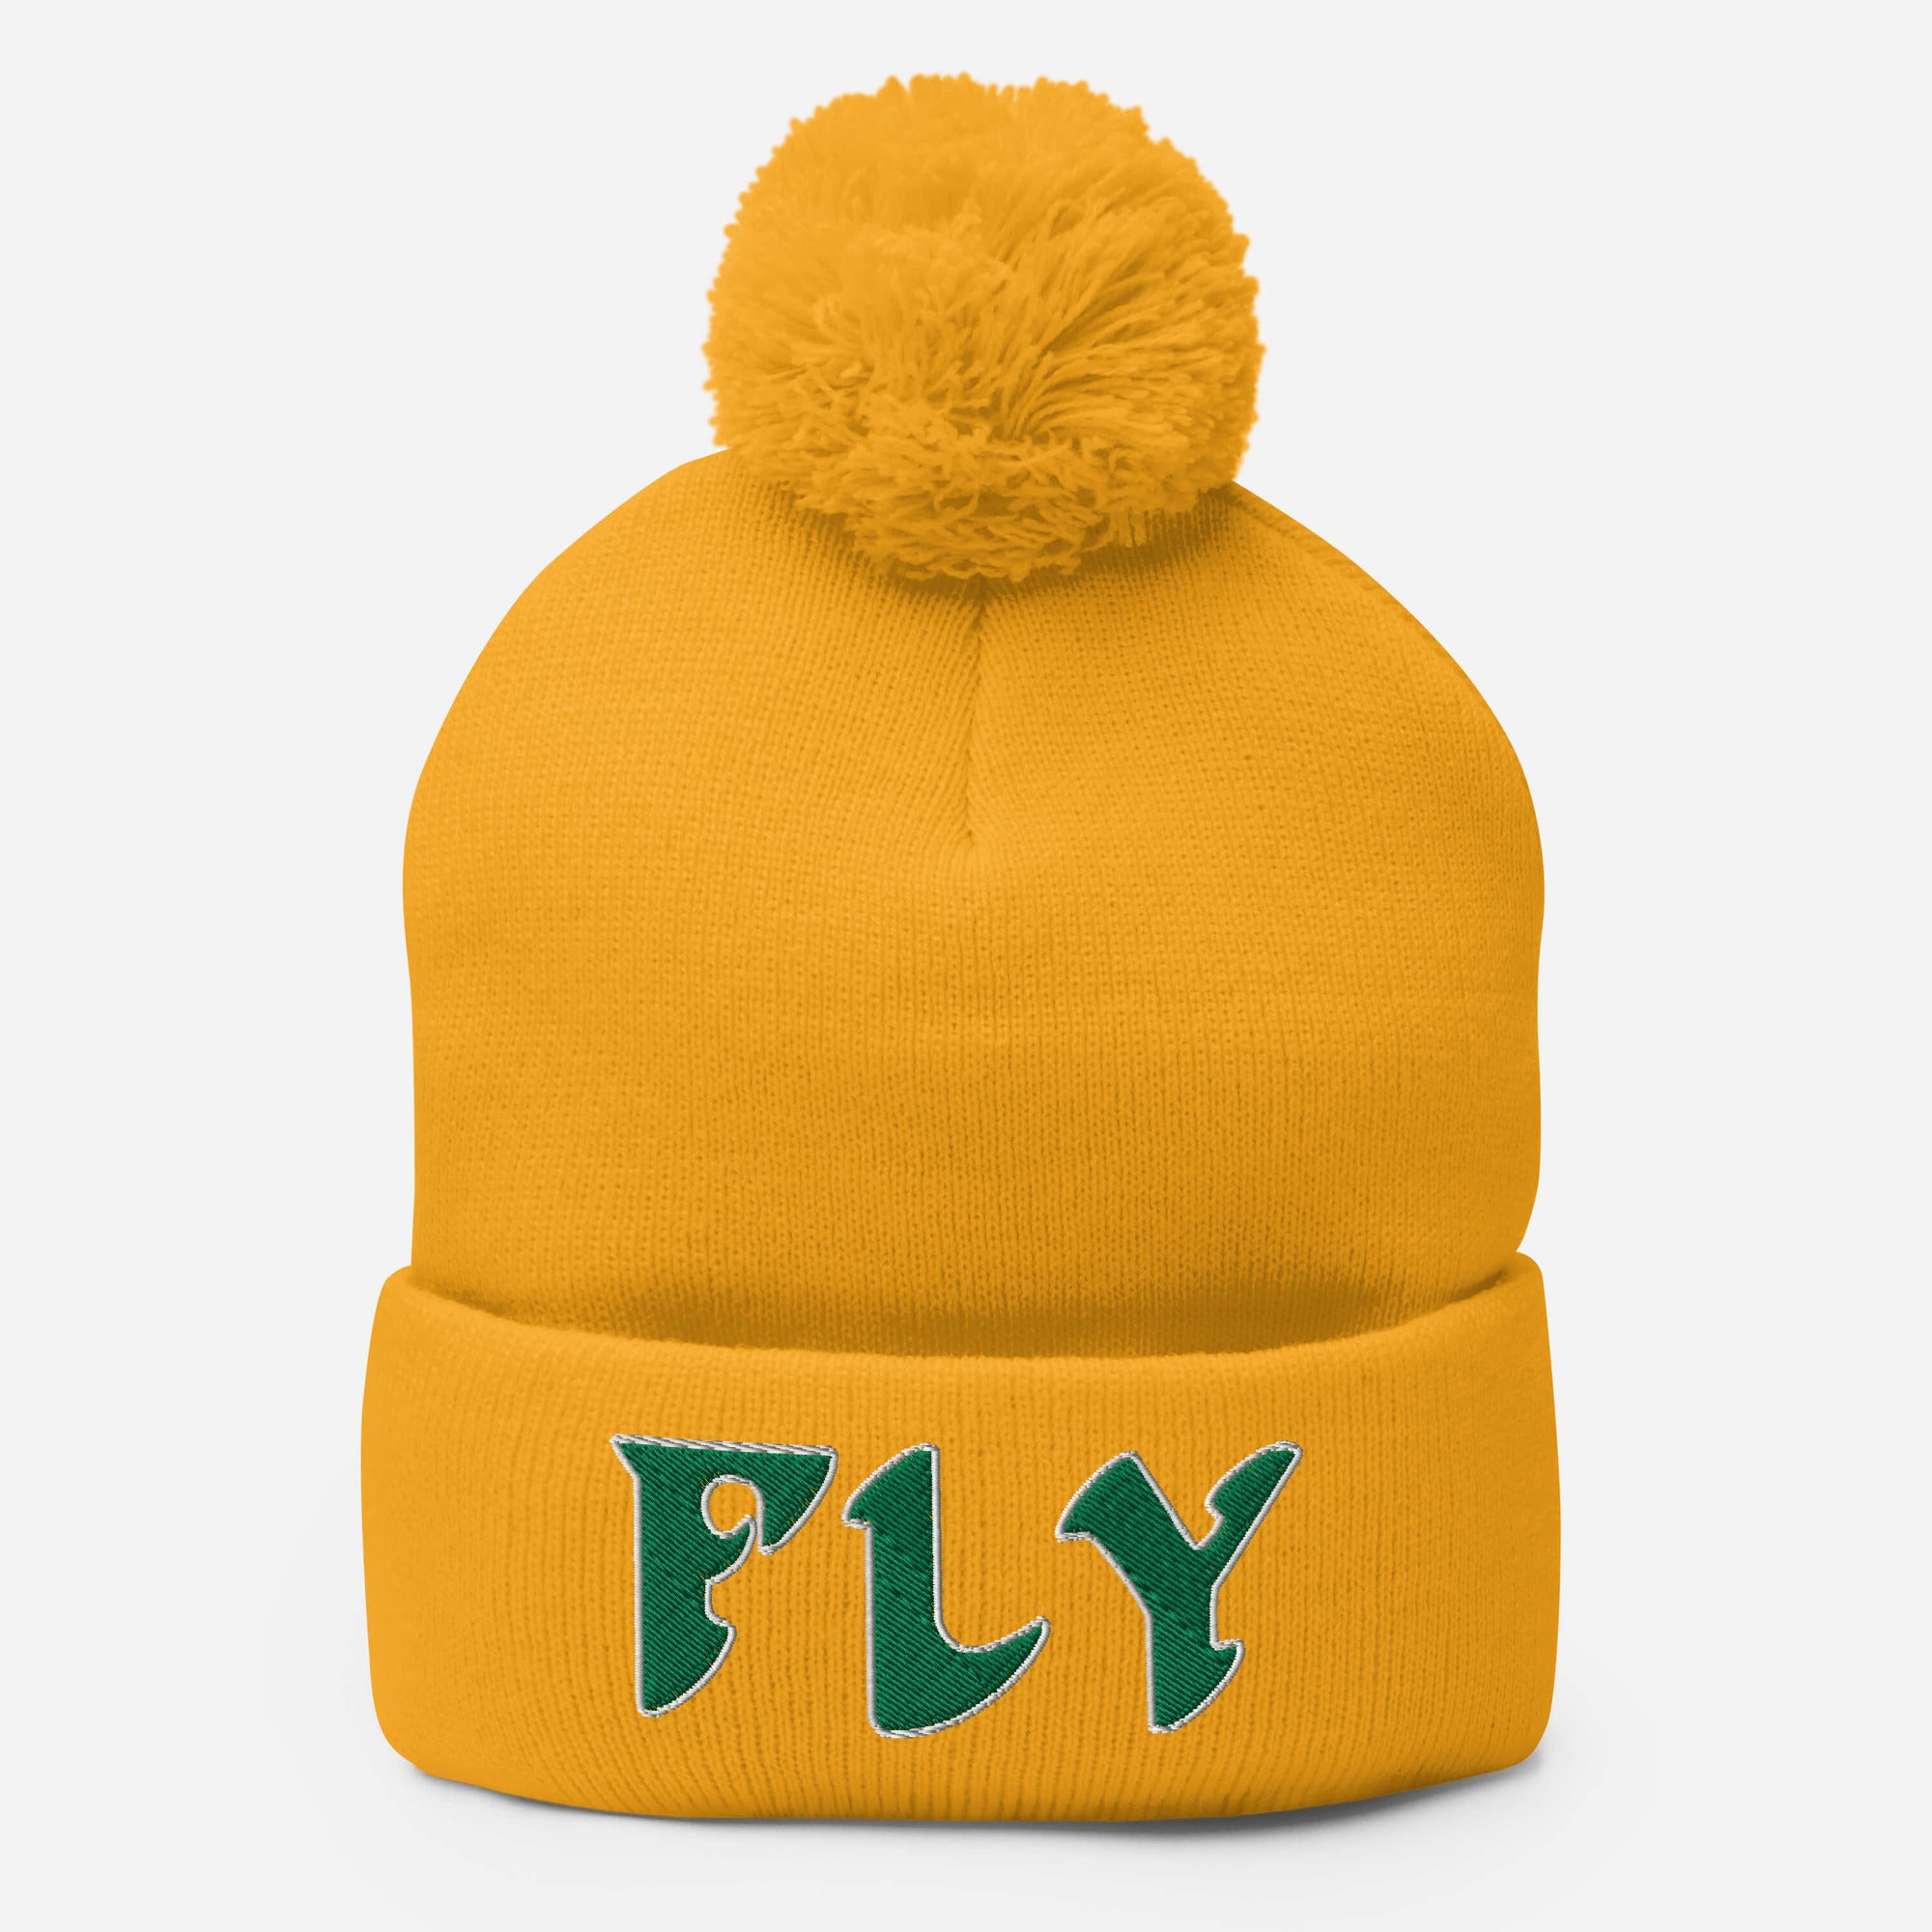 "FLY" Knit Hat